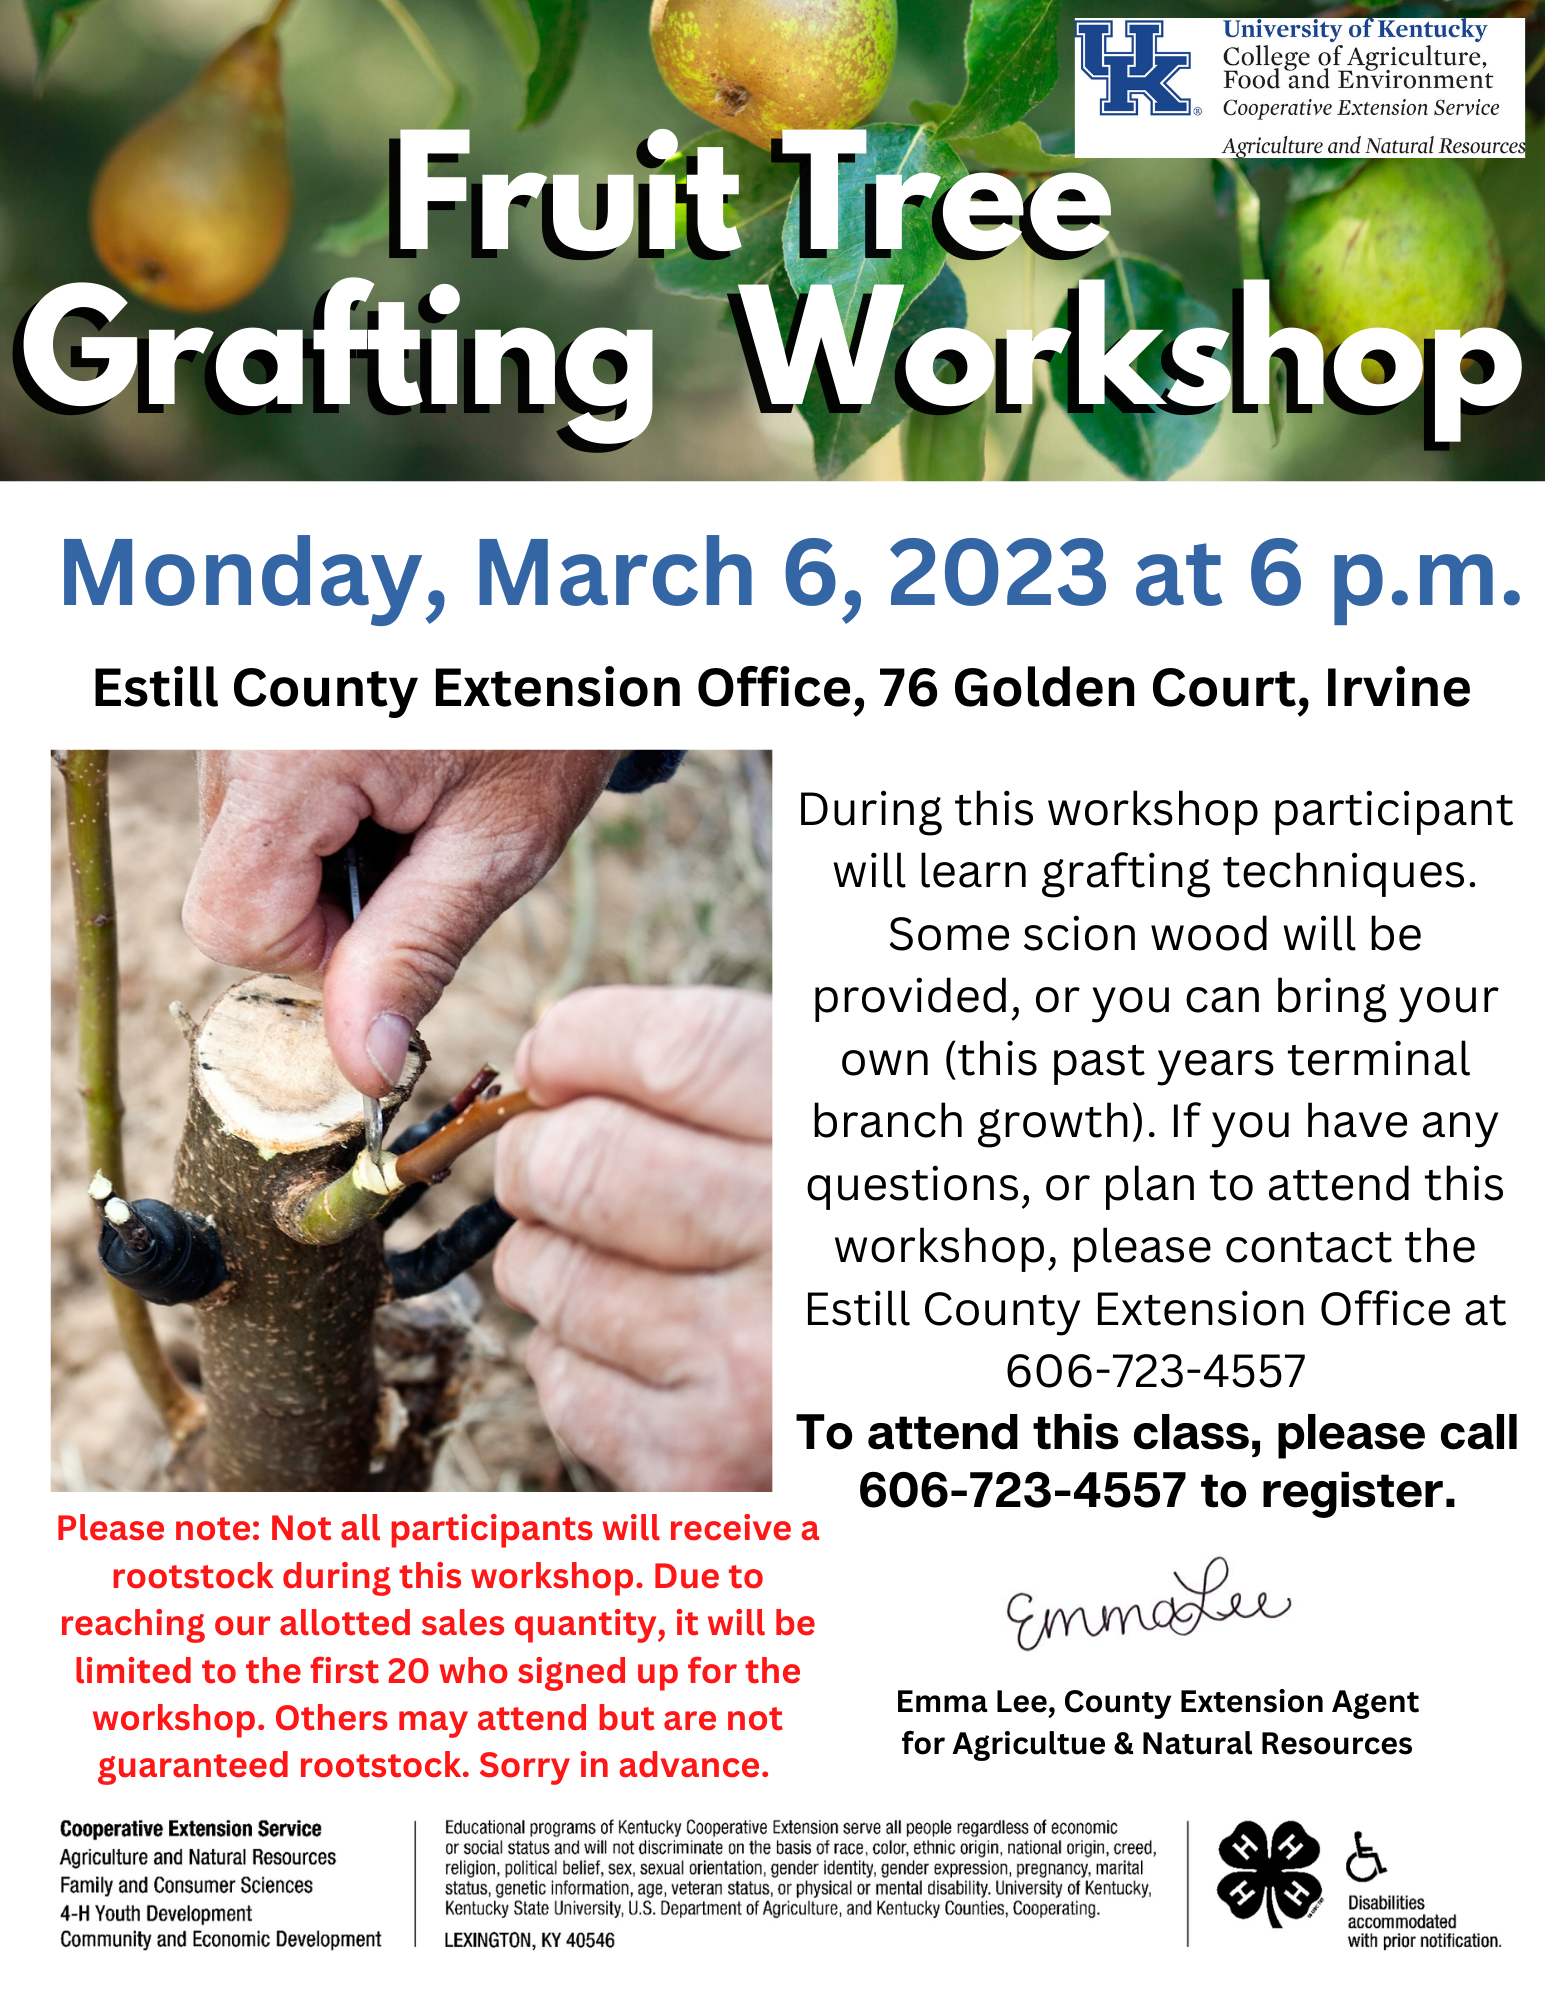 March 6 Fruit Tree Grafting Workshop flyer